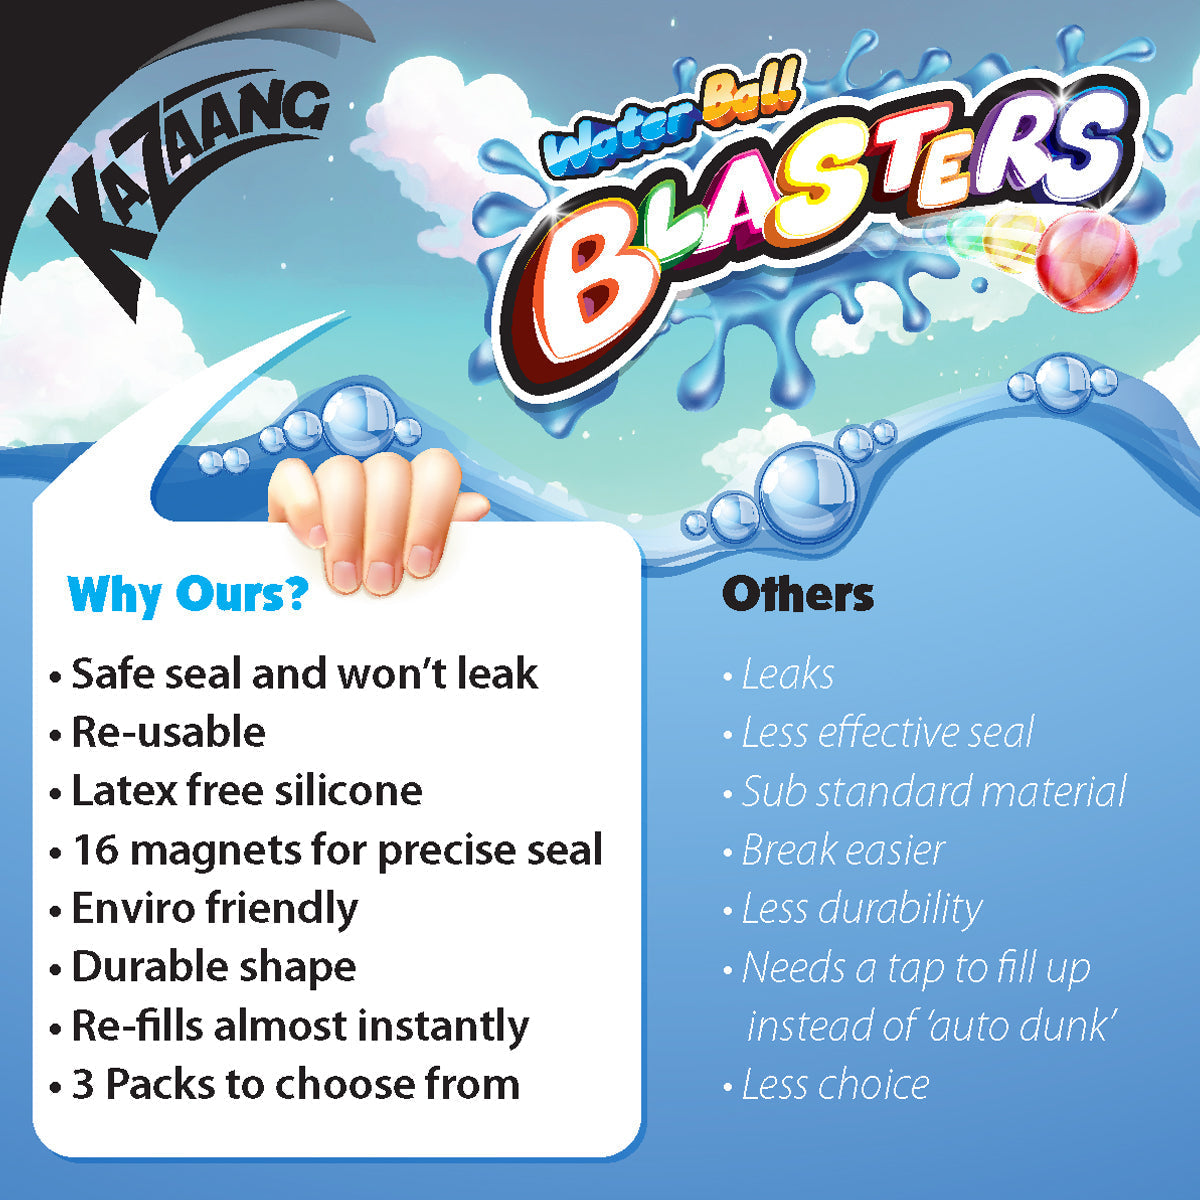 Water Ball Blasters - 12 Pack